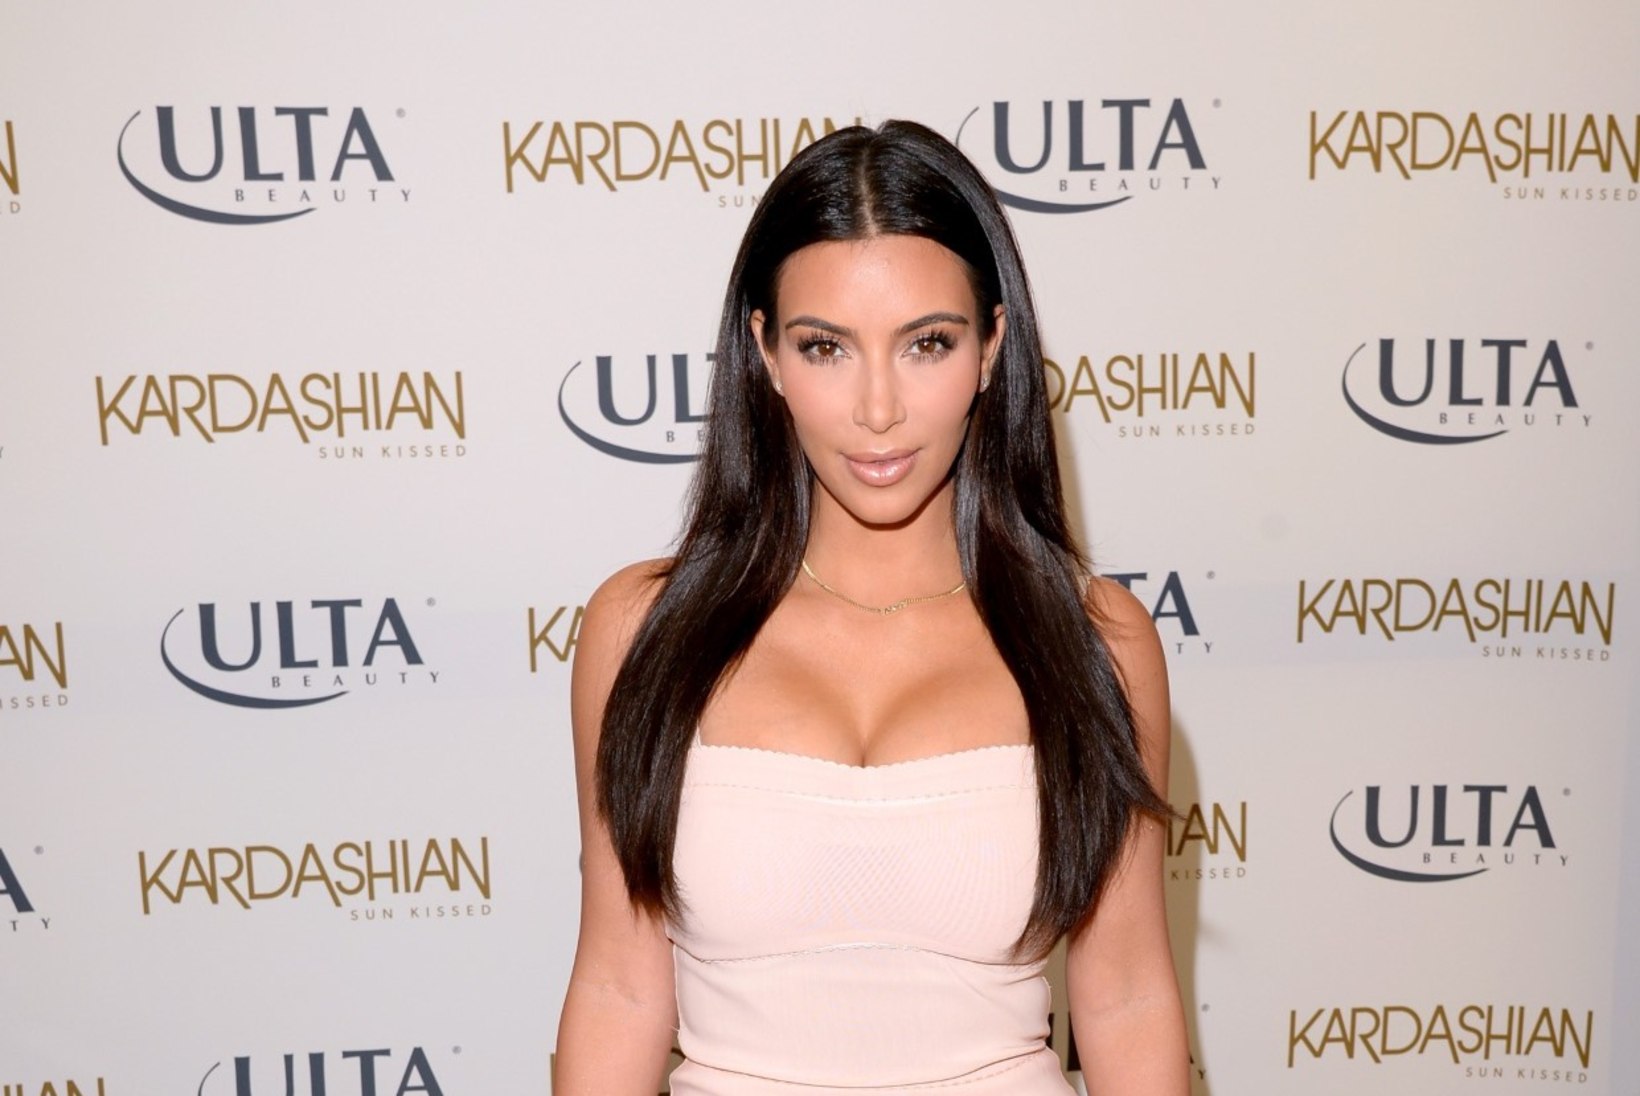 56 kilo kaaluv Kim Kardashian pole oma kehaga rahul